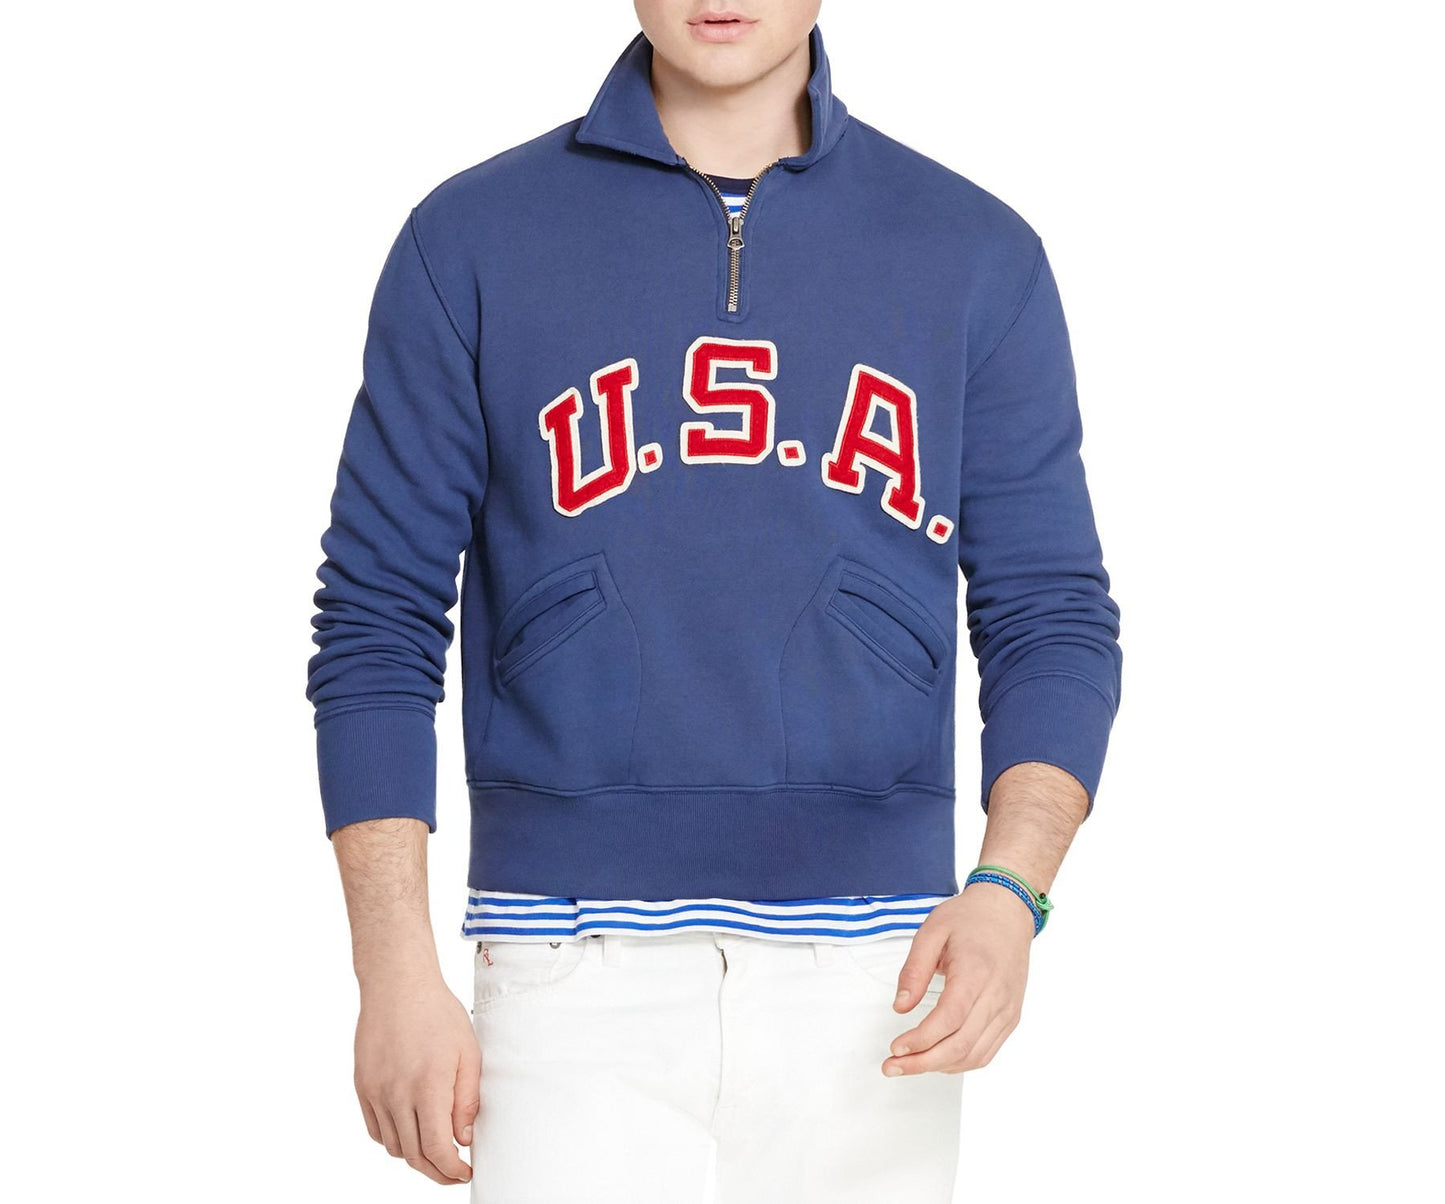 Team USA Fleece Sweatshirt